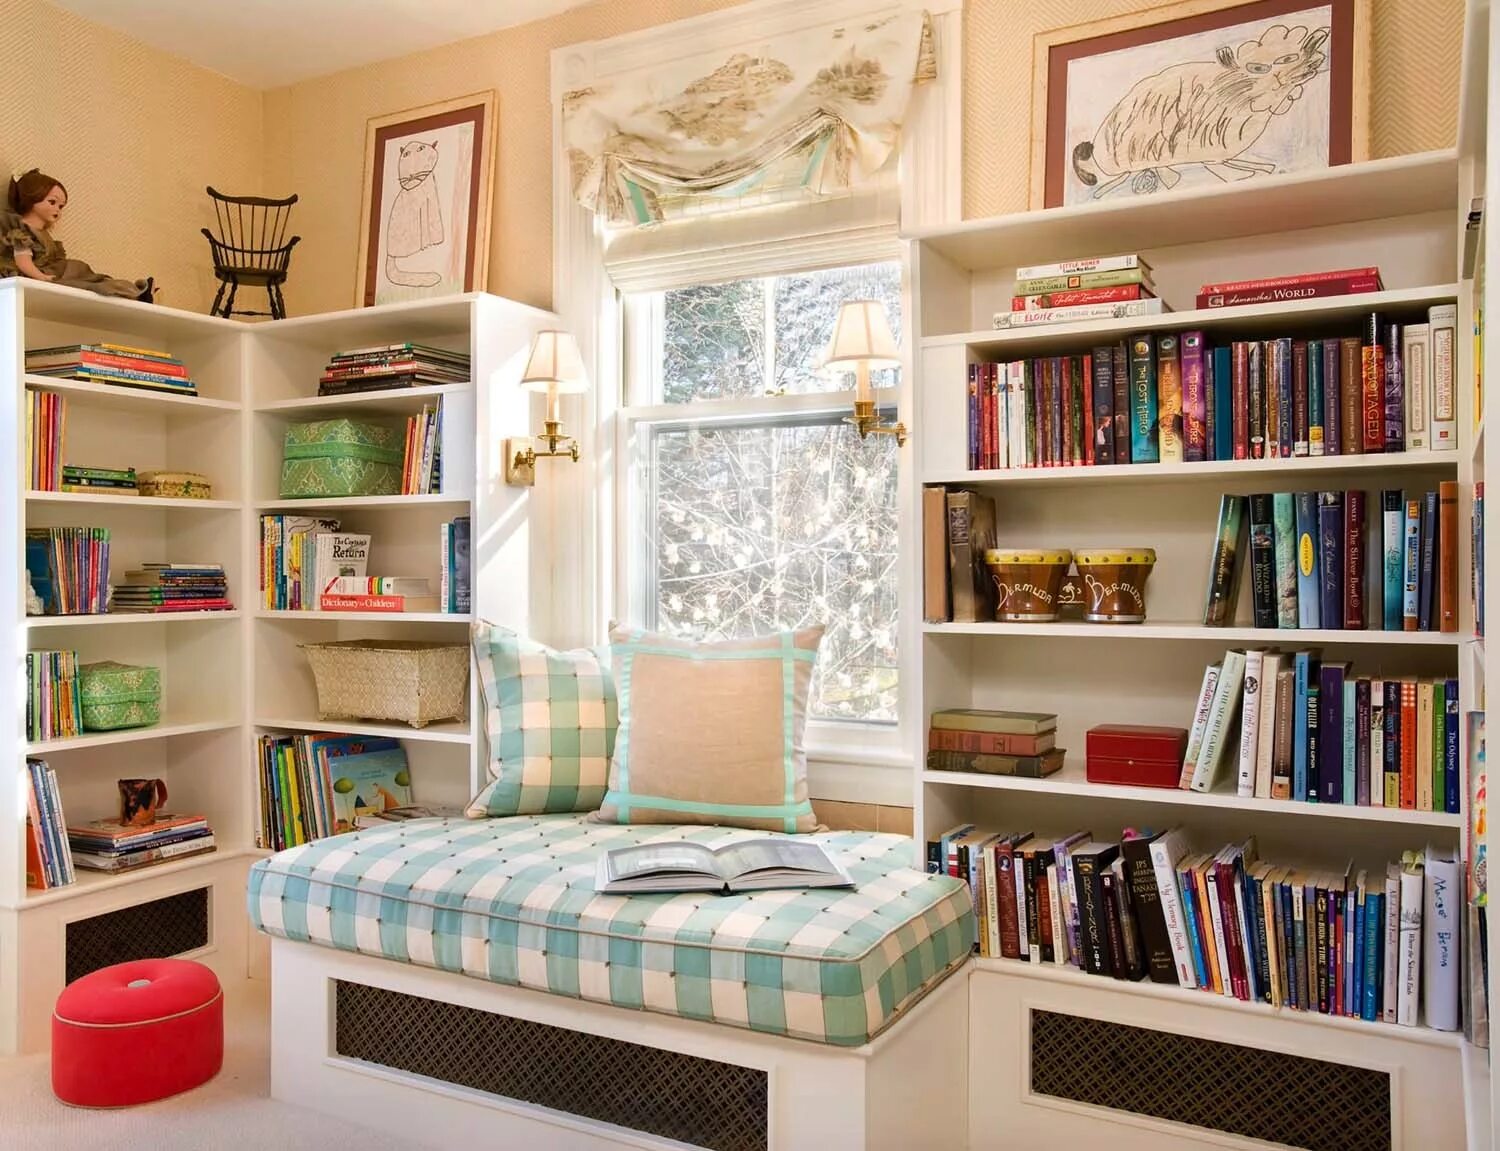 Комната с книжным шкафом. Уютная комната с книжными полками. Комната с книжными полками. Книжный стеллаж в маленькой комнате.